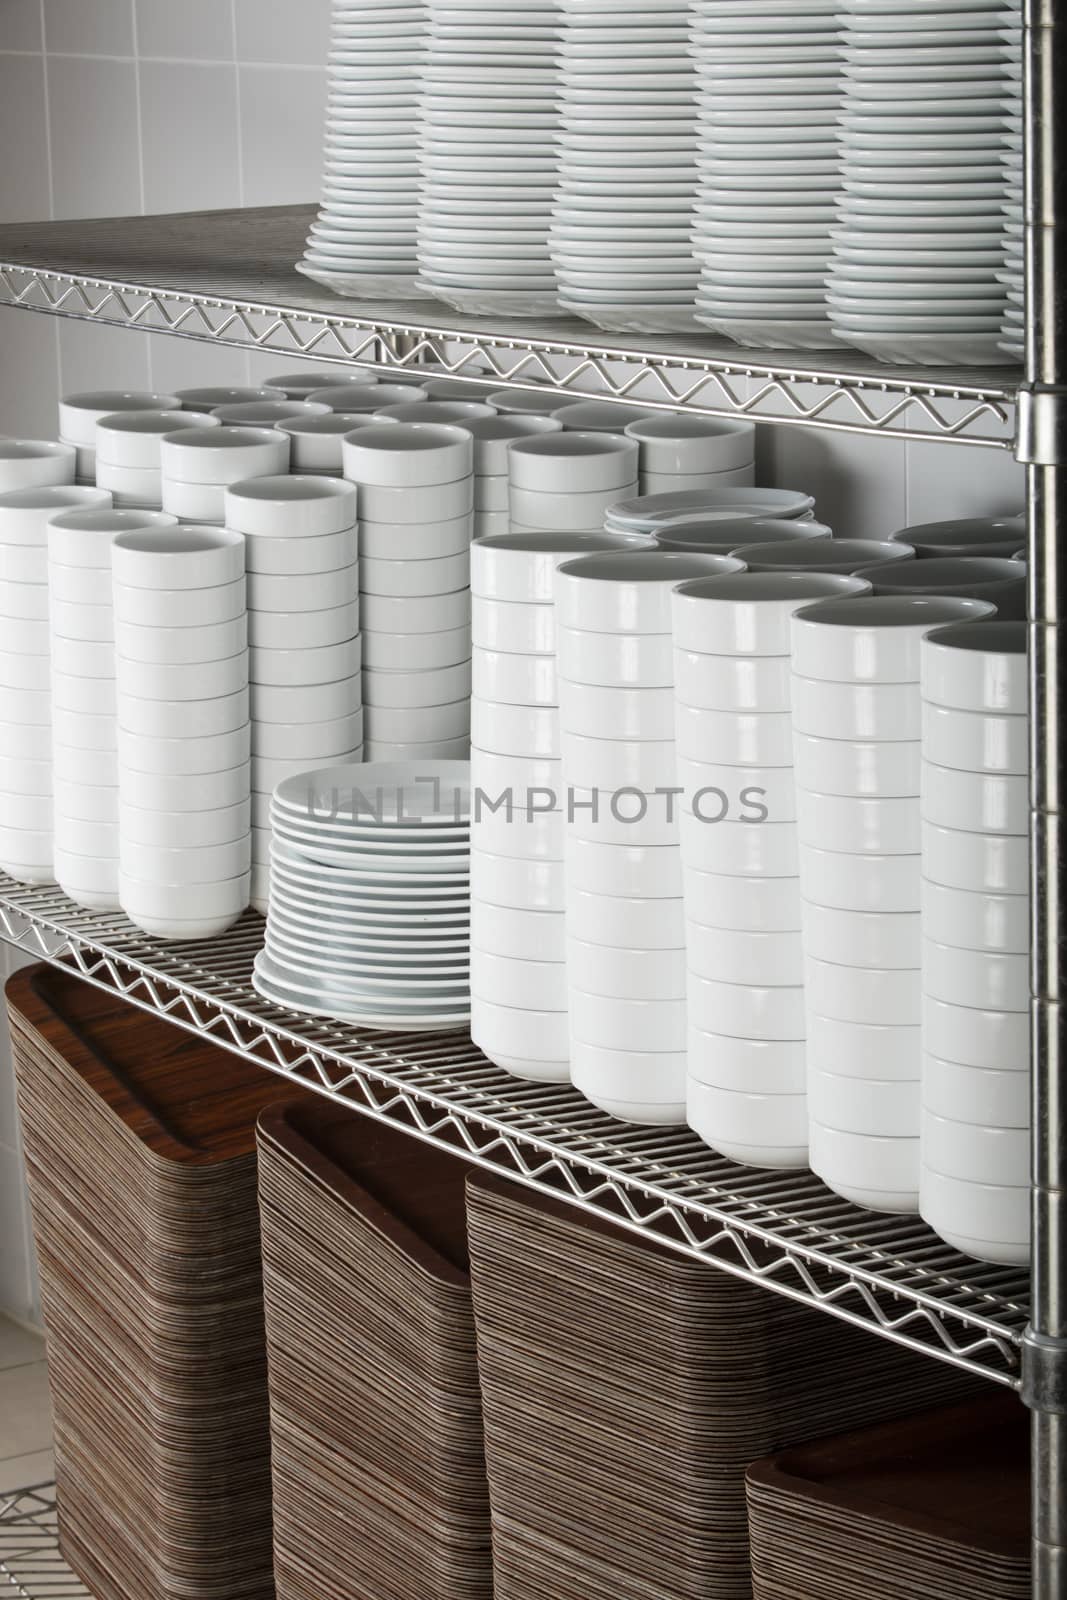 many white plates on a wire rack by senkaya